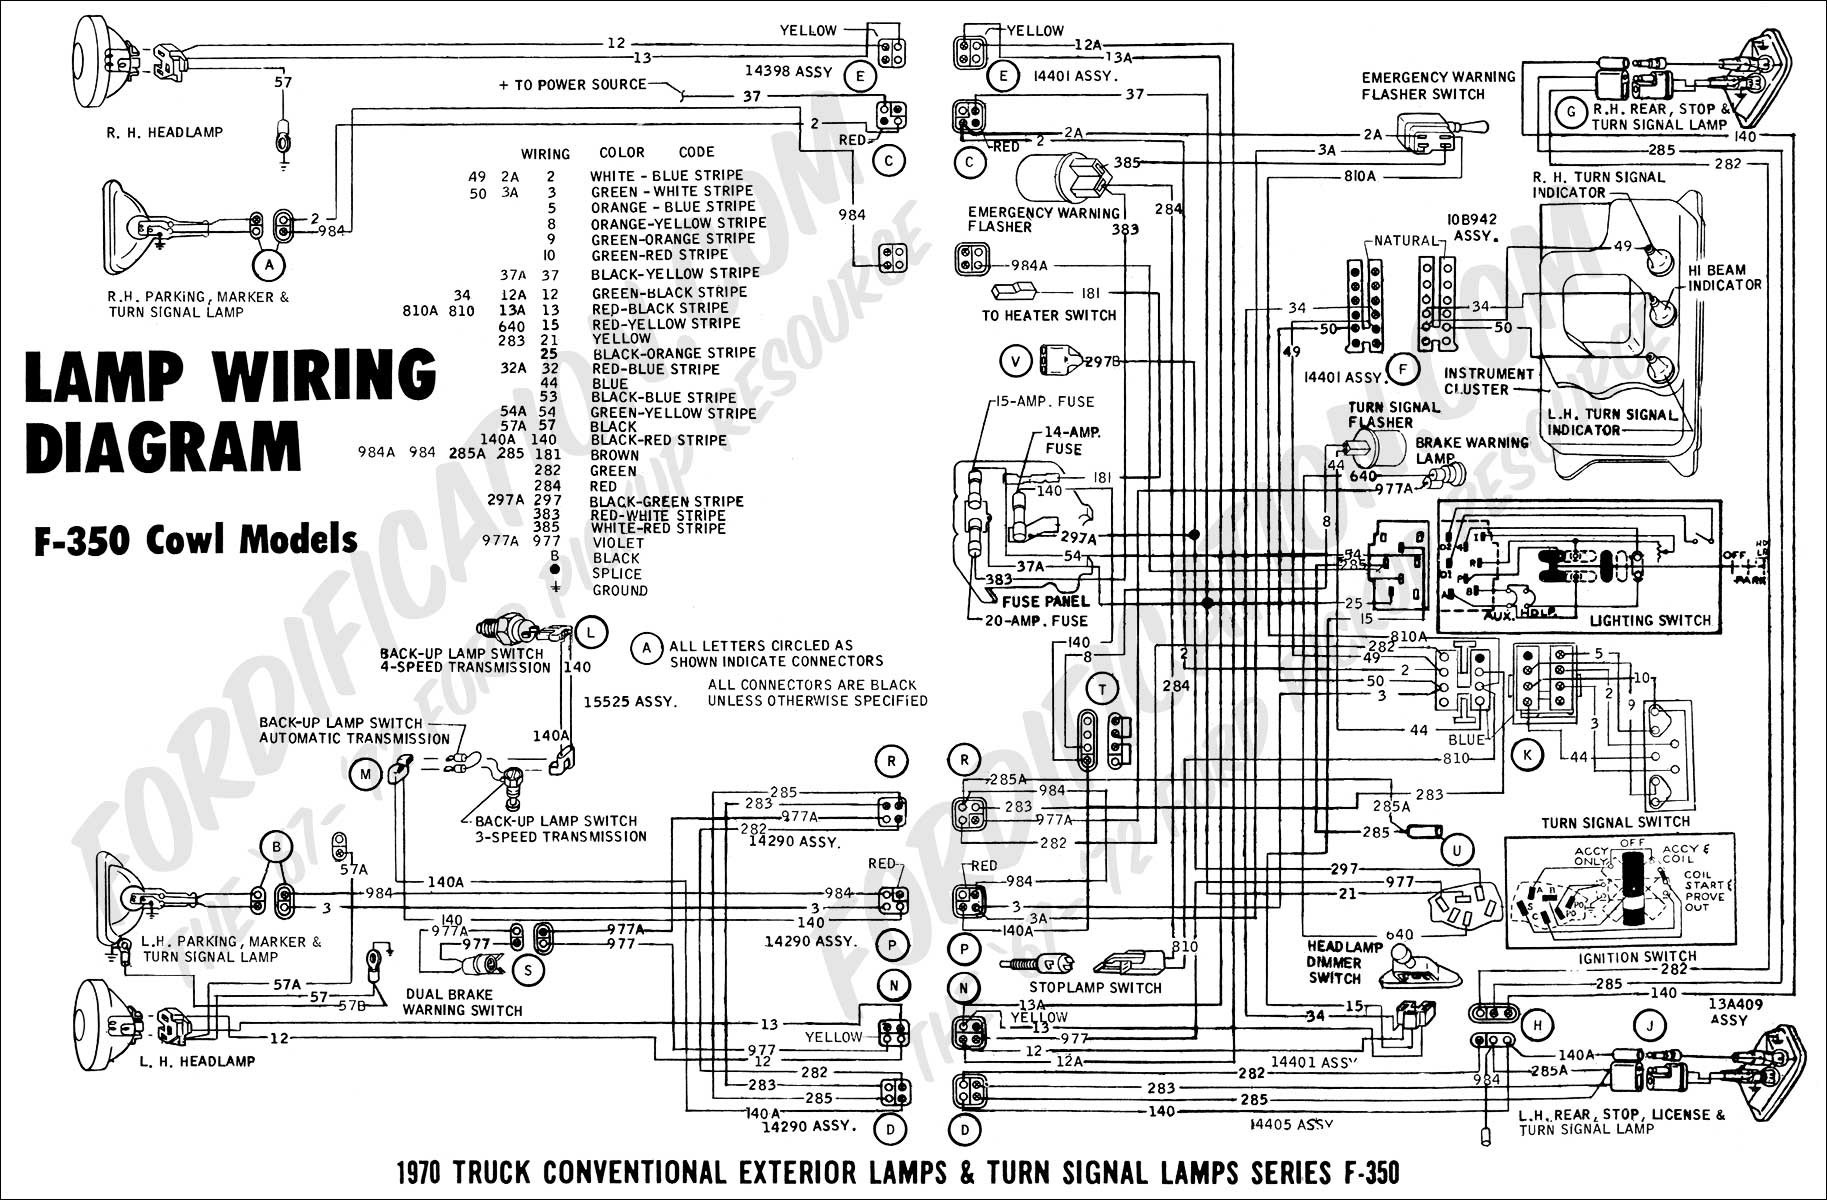 2018 Ford F550 Wiring Schematic - Wiring Diagram